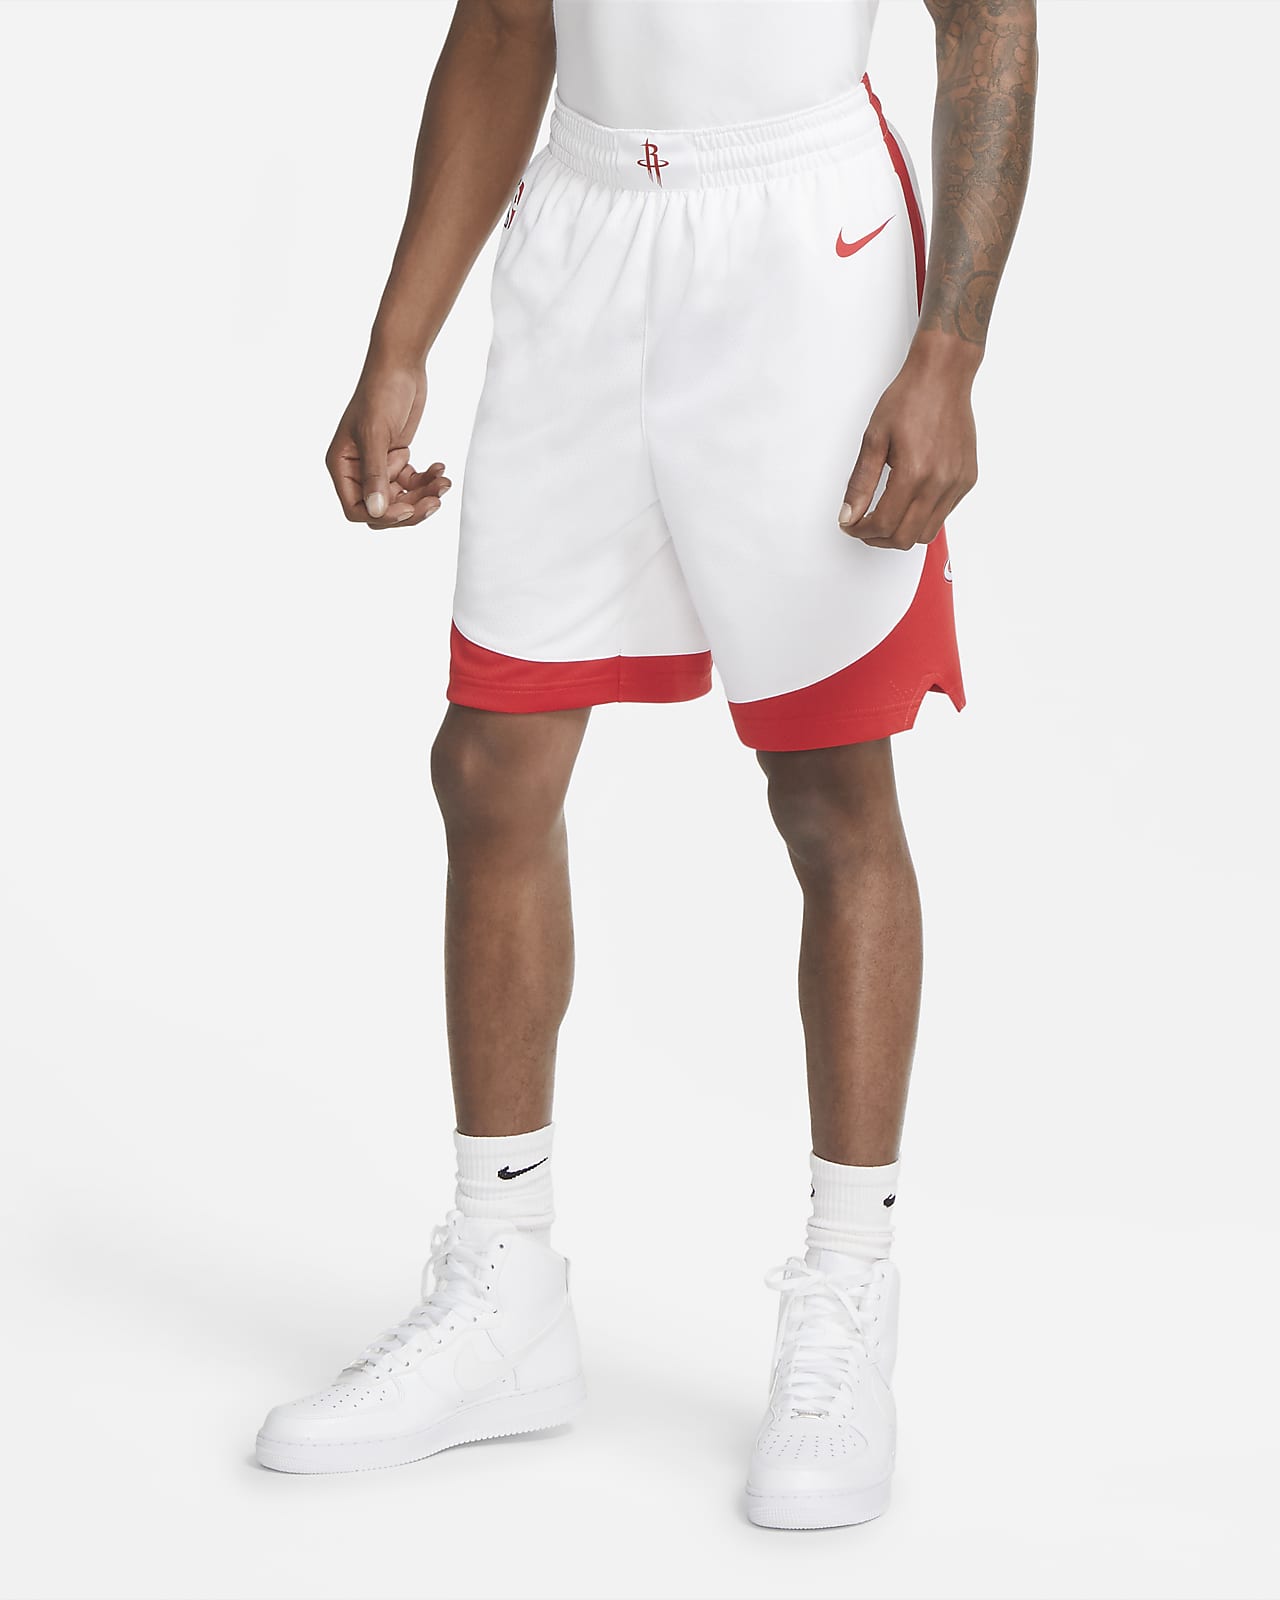 Rockets Nba Shorts - Houston Rockets City Edition 2020 Men S Nike Nba ...